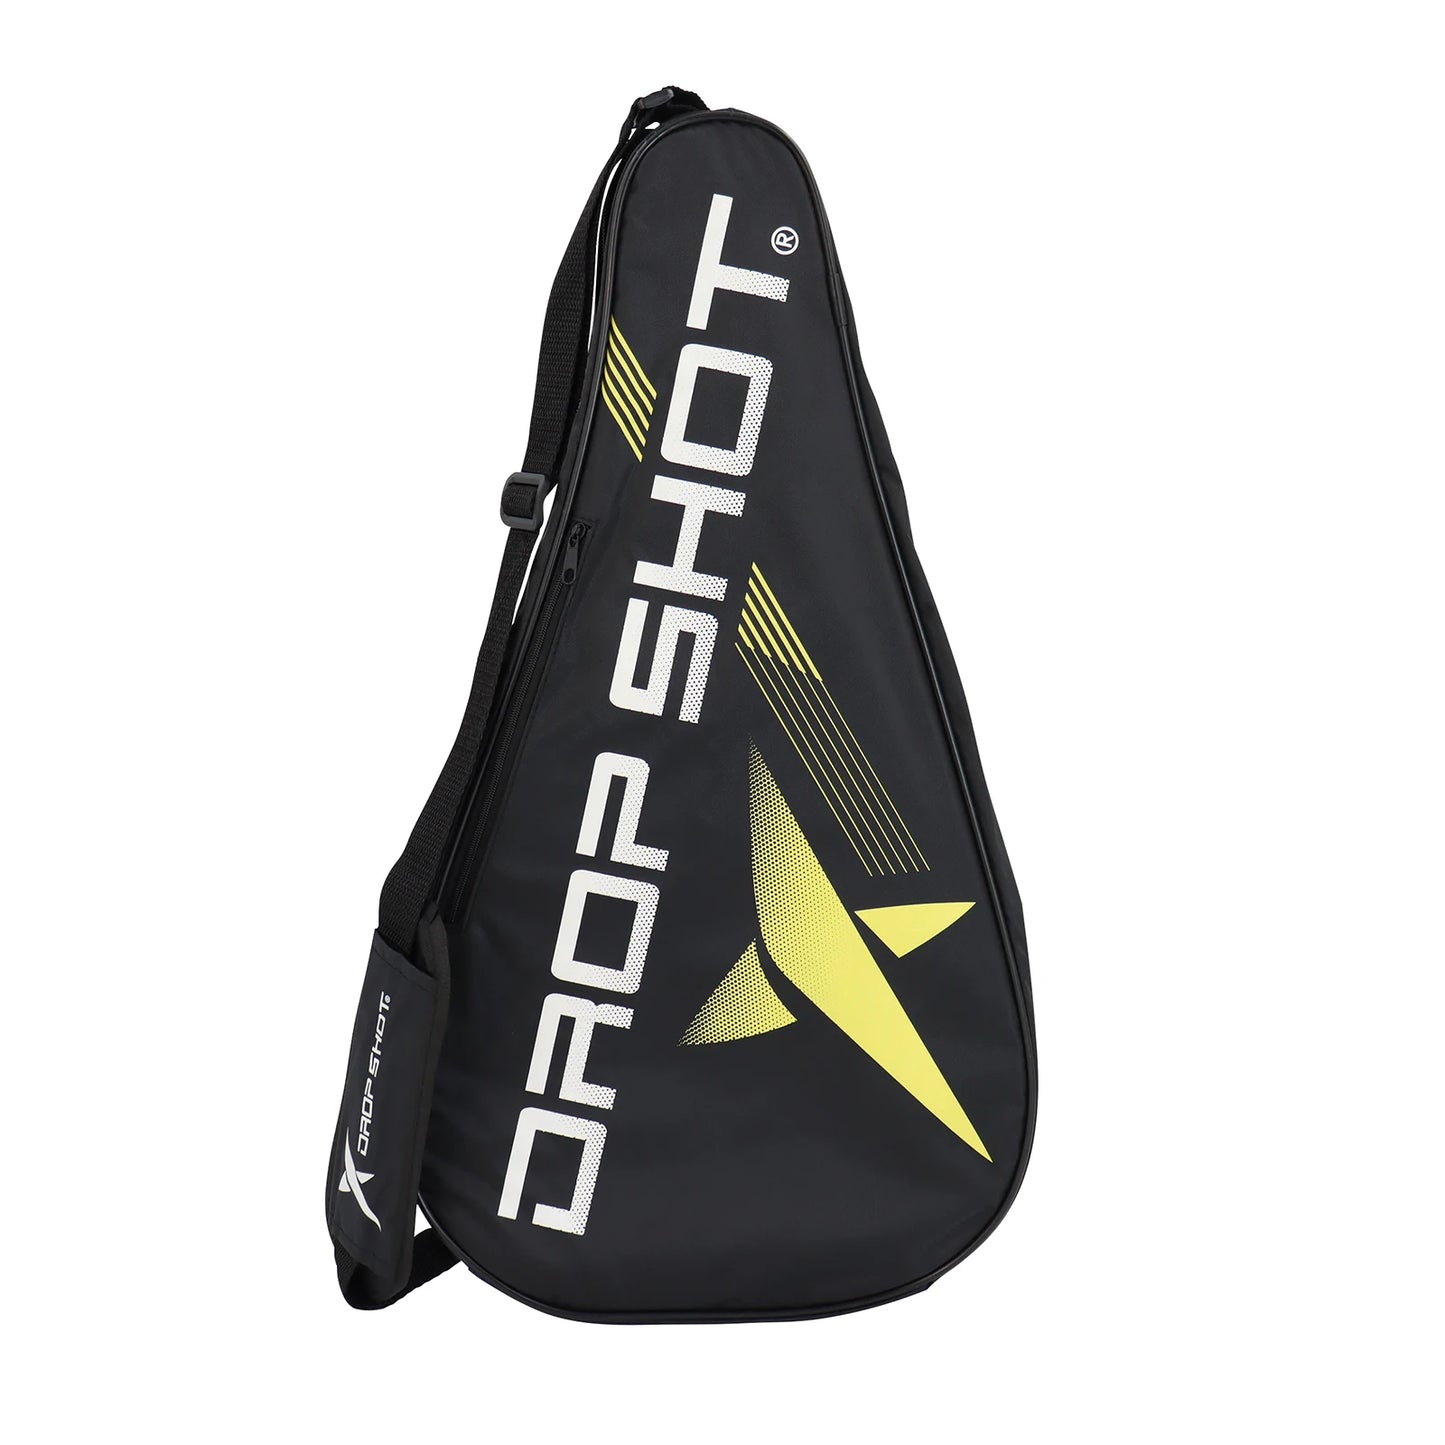 EXPLORER PRO 4.0 Mens Tennis Padel Racket 3K/12K Carbon Fiber EVA Padel Paddle Racket with Cover Bag